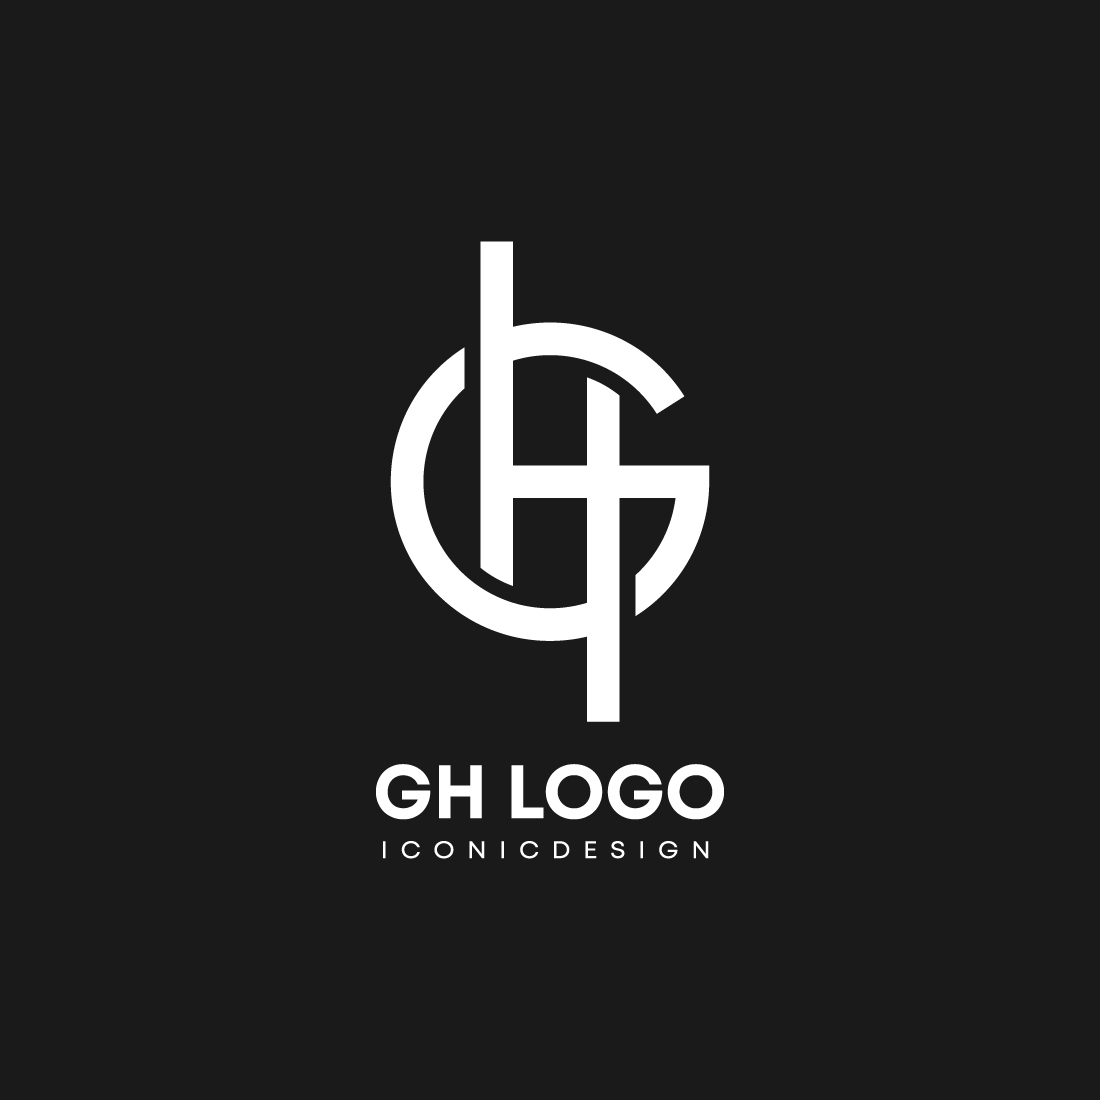 GH logo preview image.